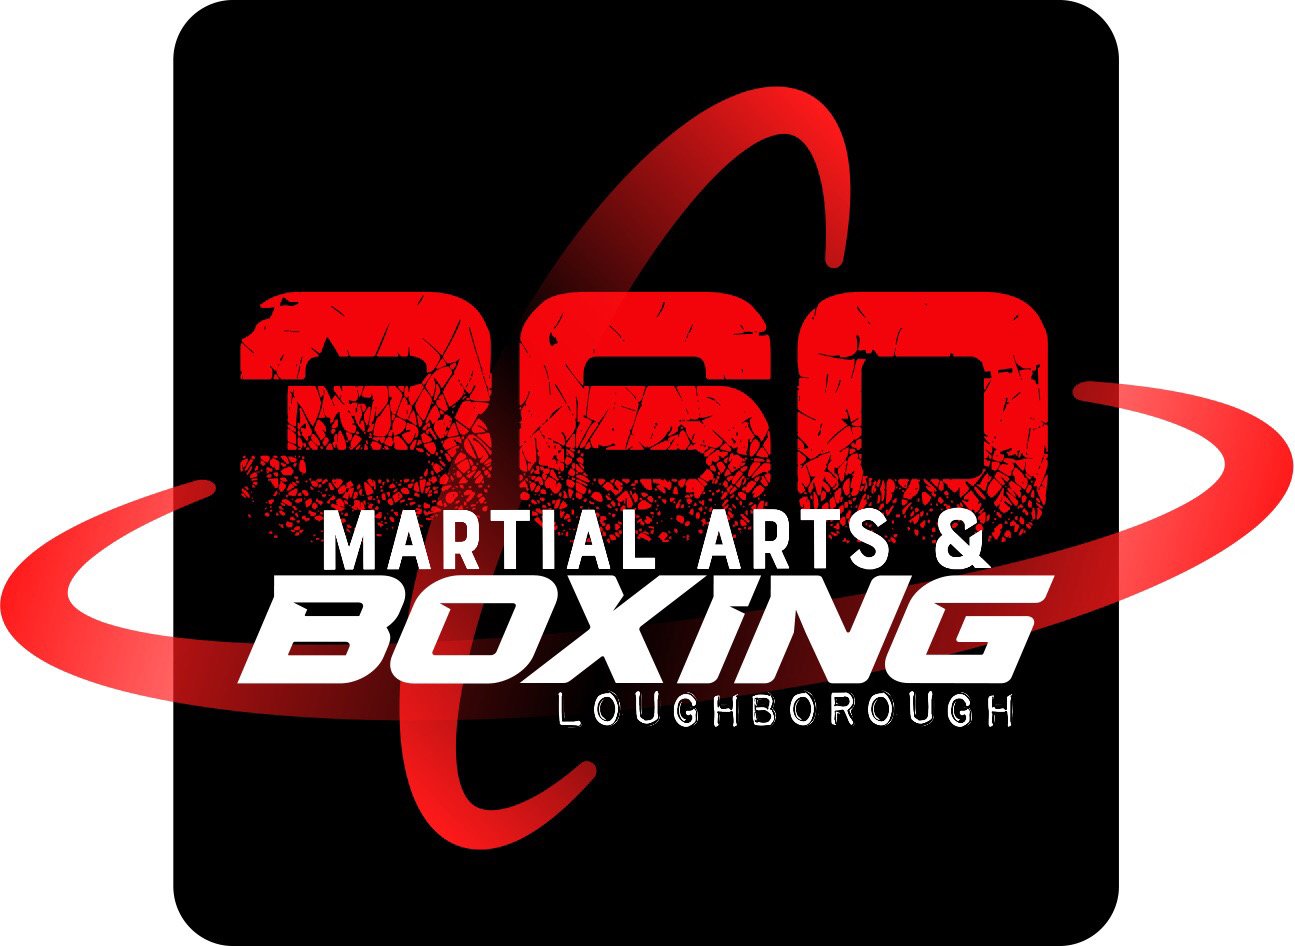 360 Martial Arts & Boxing Loughborough logo